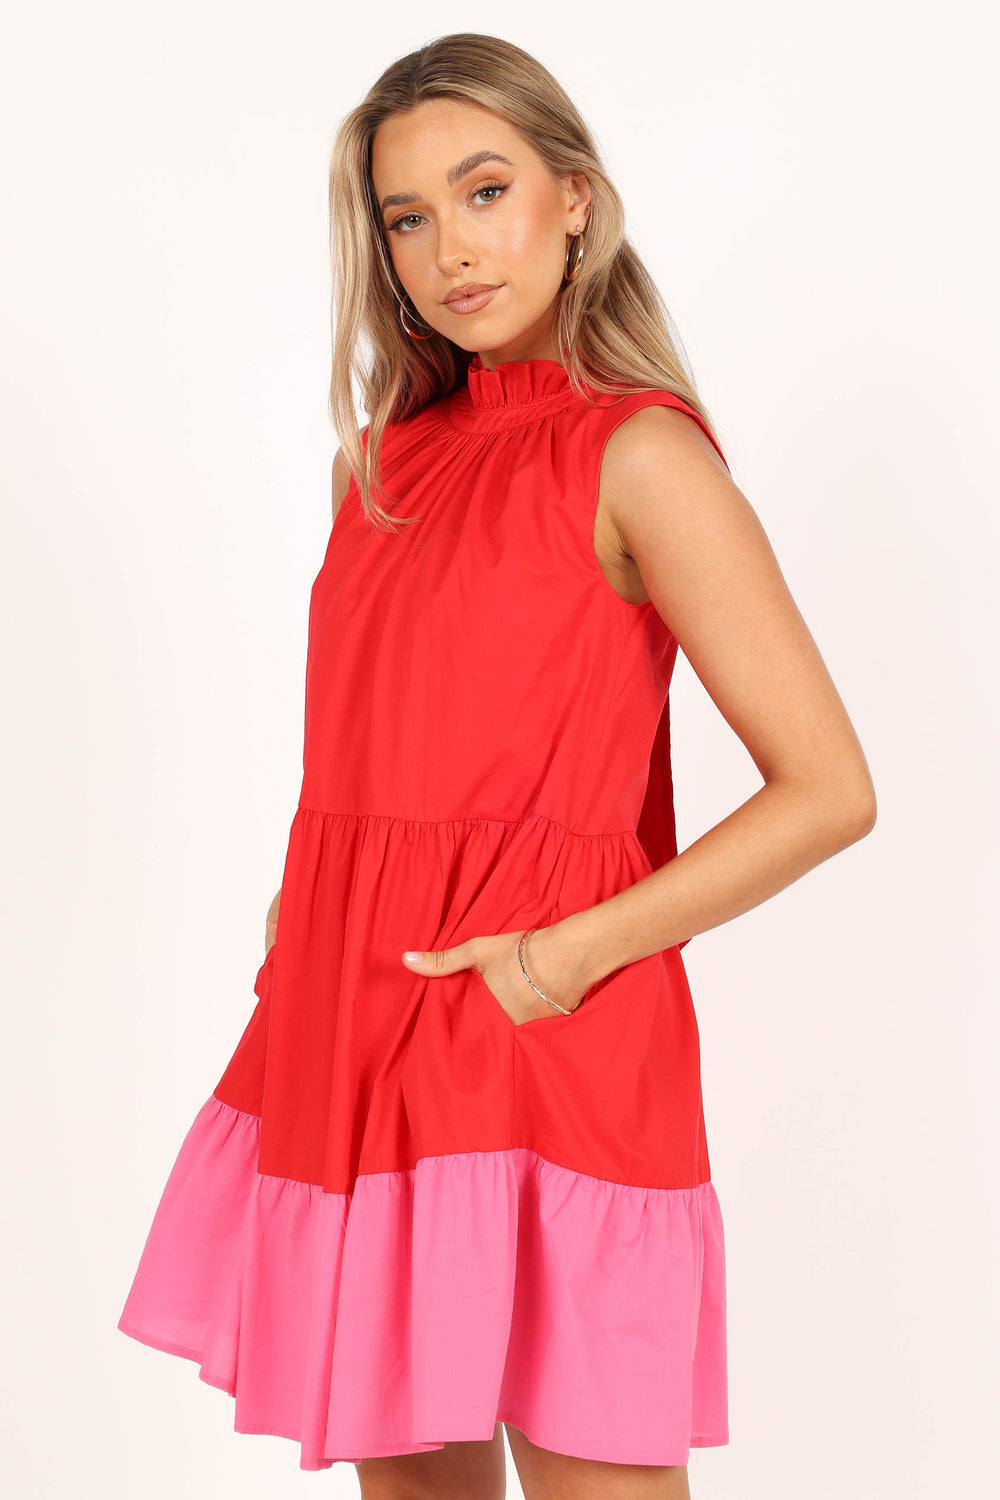 Petal and Pup USA DRESSES Bradshaw Tiered Mini Dress - Red/Pink